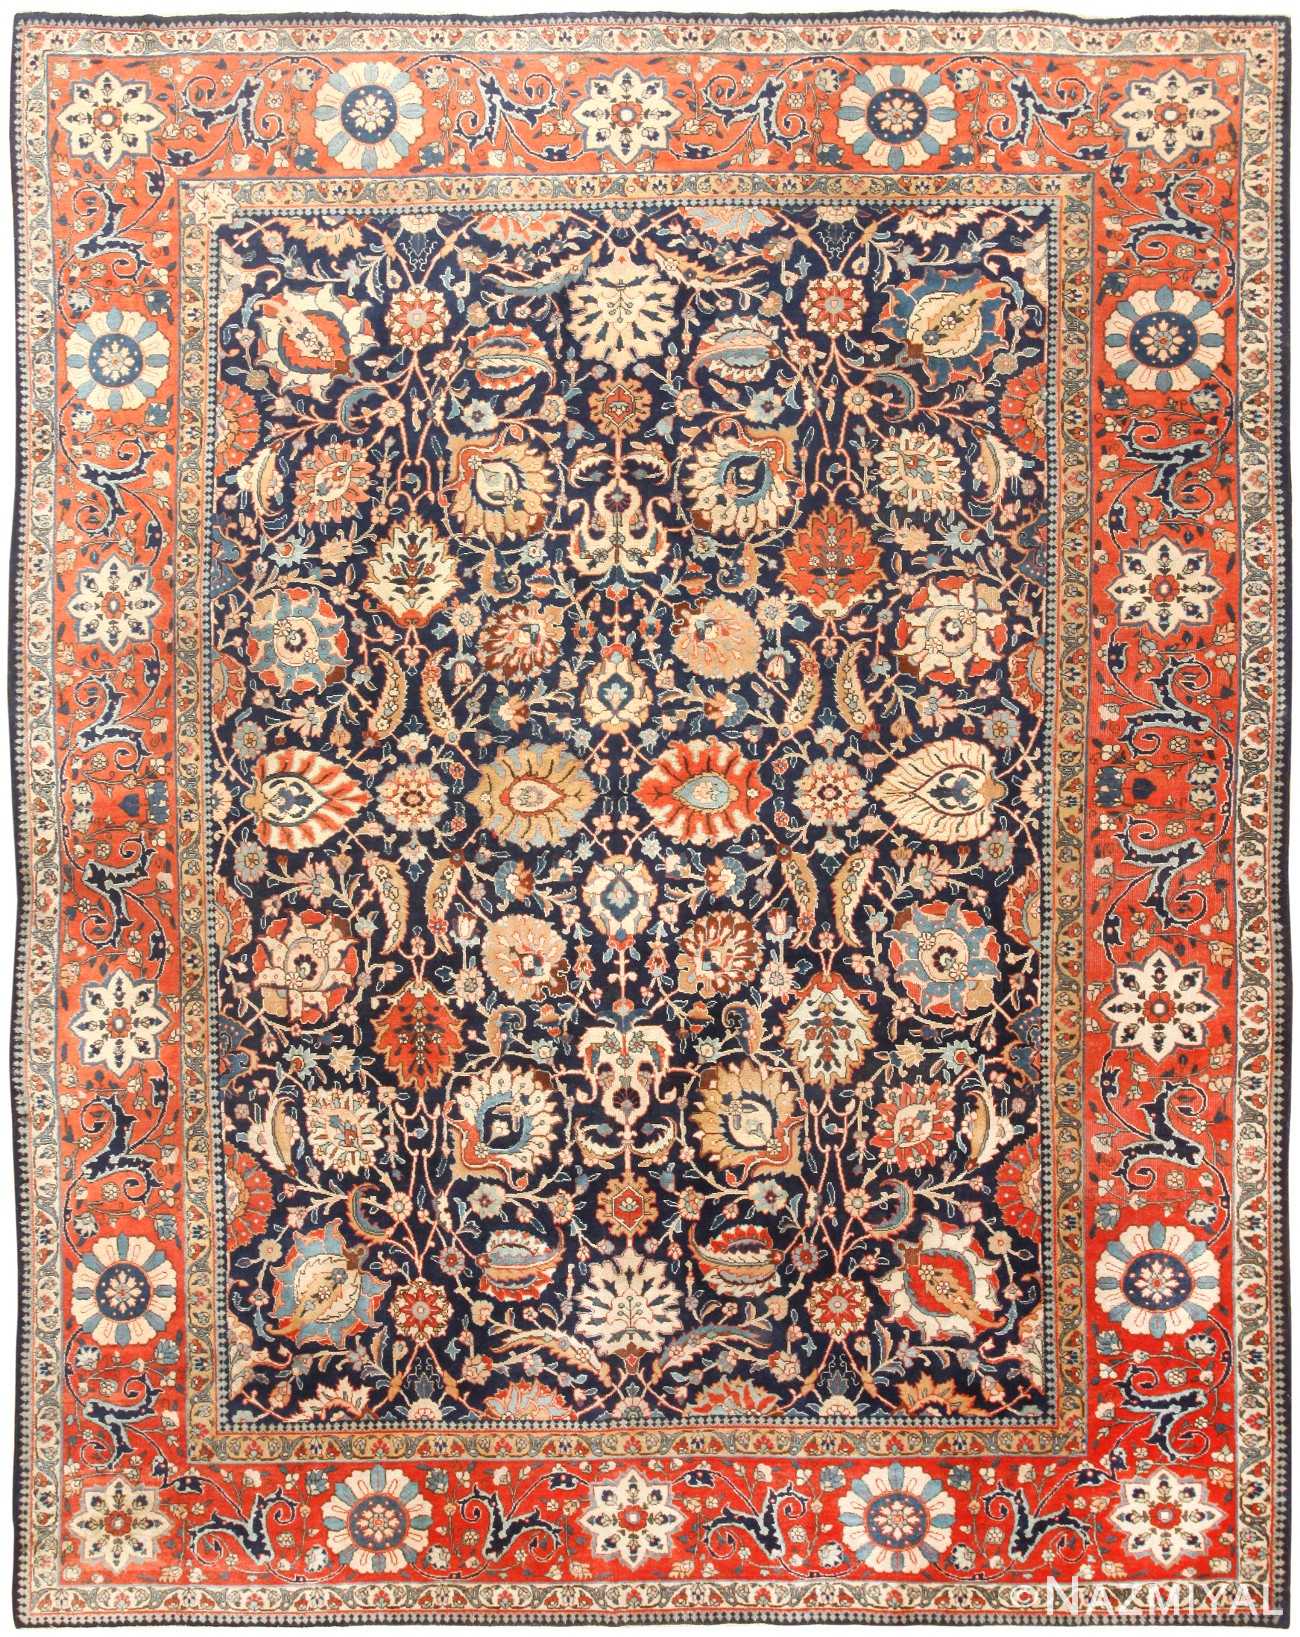 Blue Antique Room Size Persian Vase Design Tabriz Rug #47064 by Nazmiyal Antique Rugs